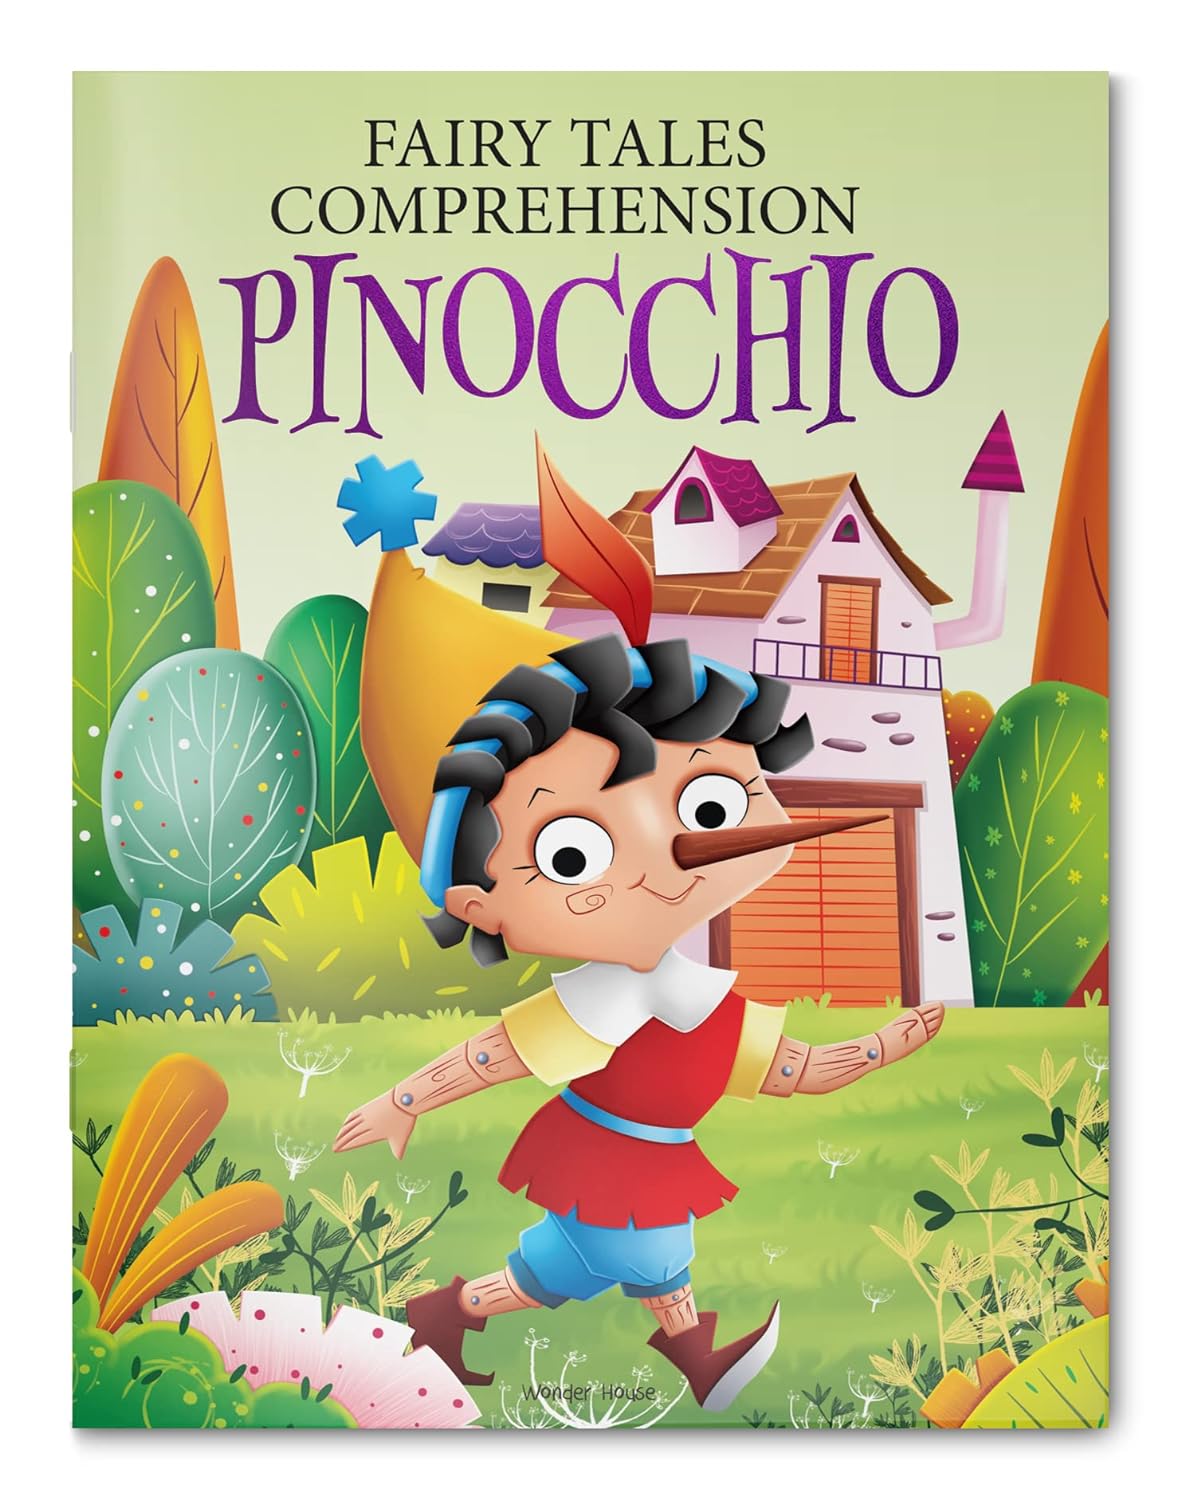 Fairy Tales Comprehension: Pinocchio